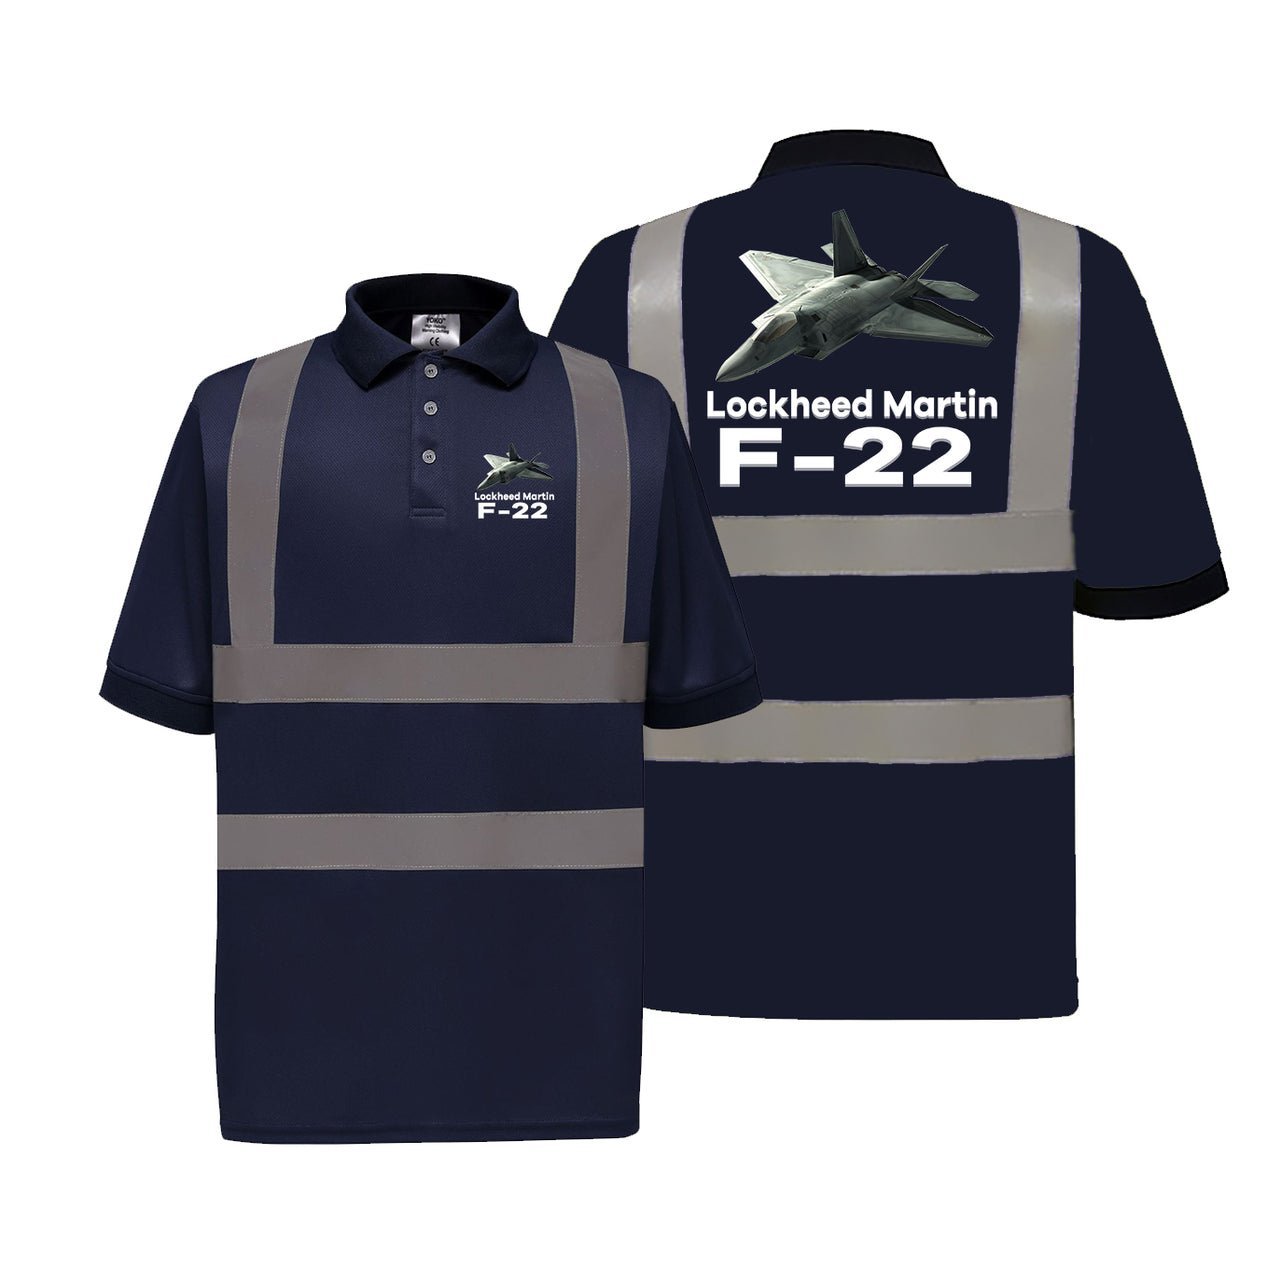 The Lockheed Martin F22 Designed Reflective Polo T-Shirts